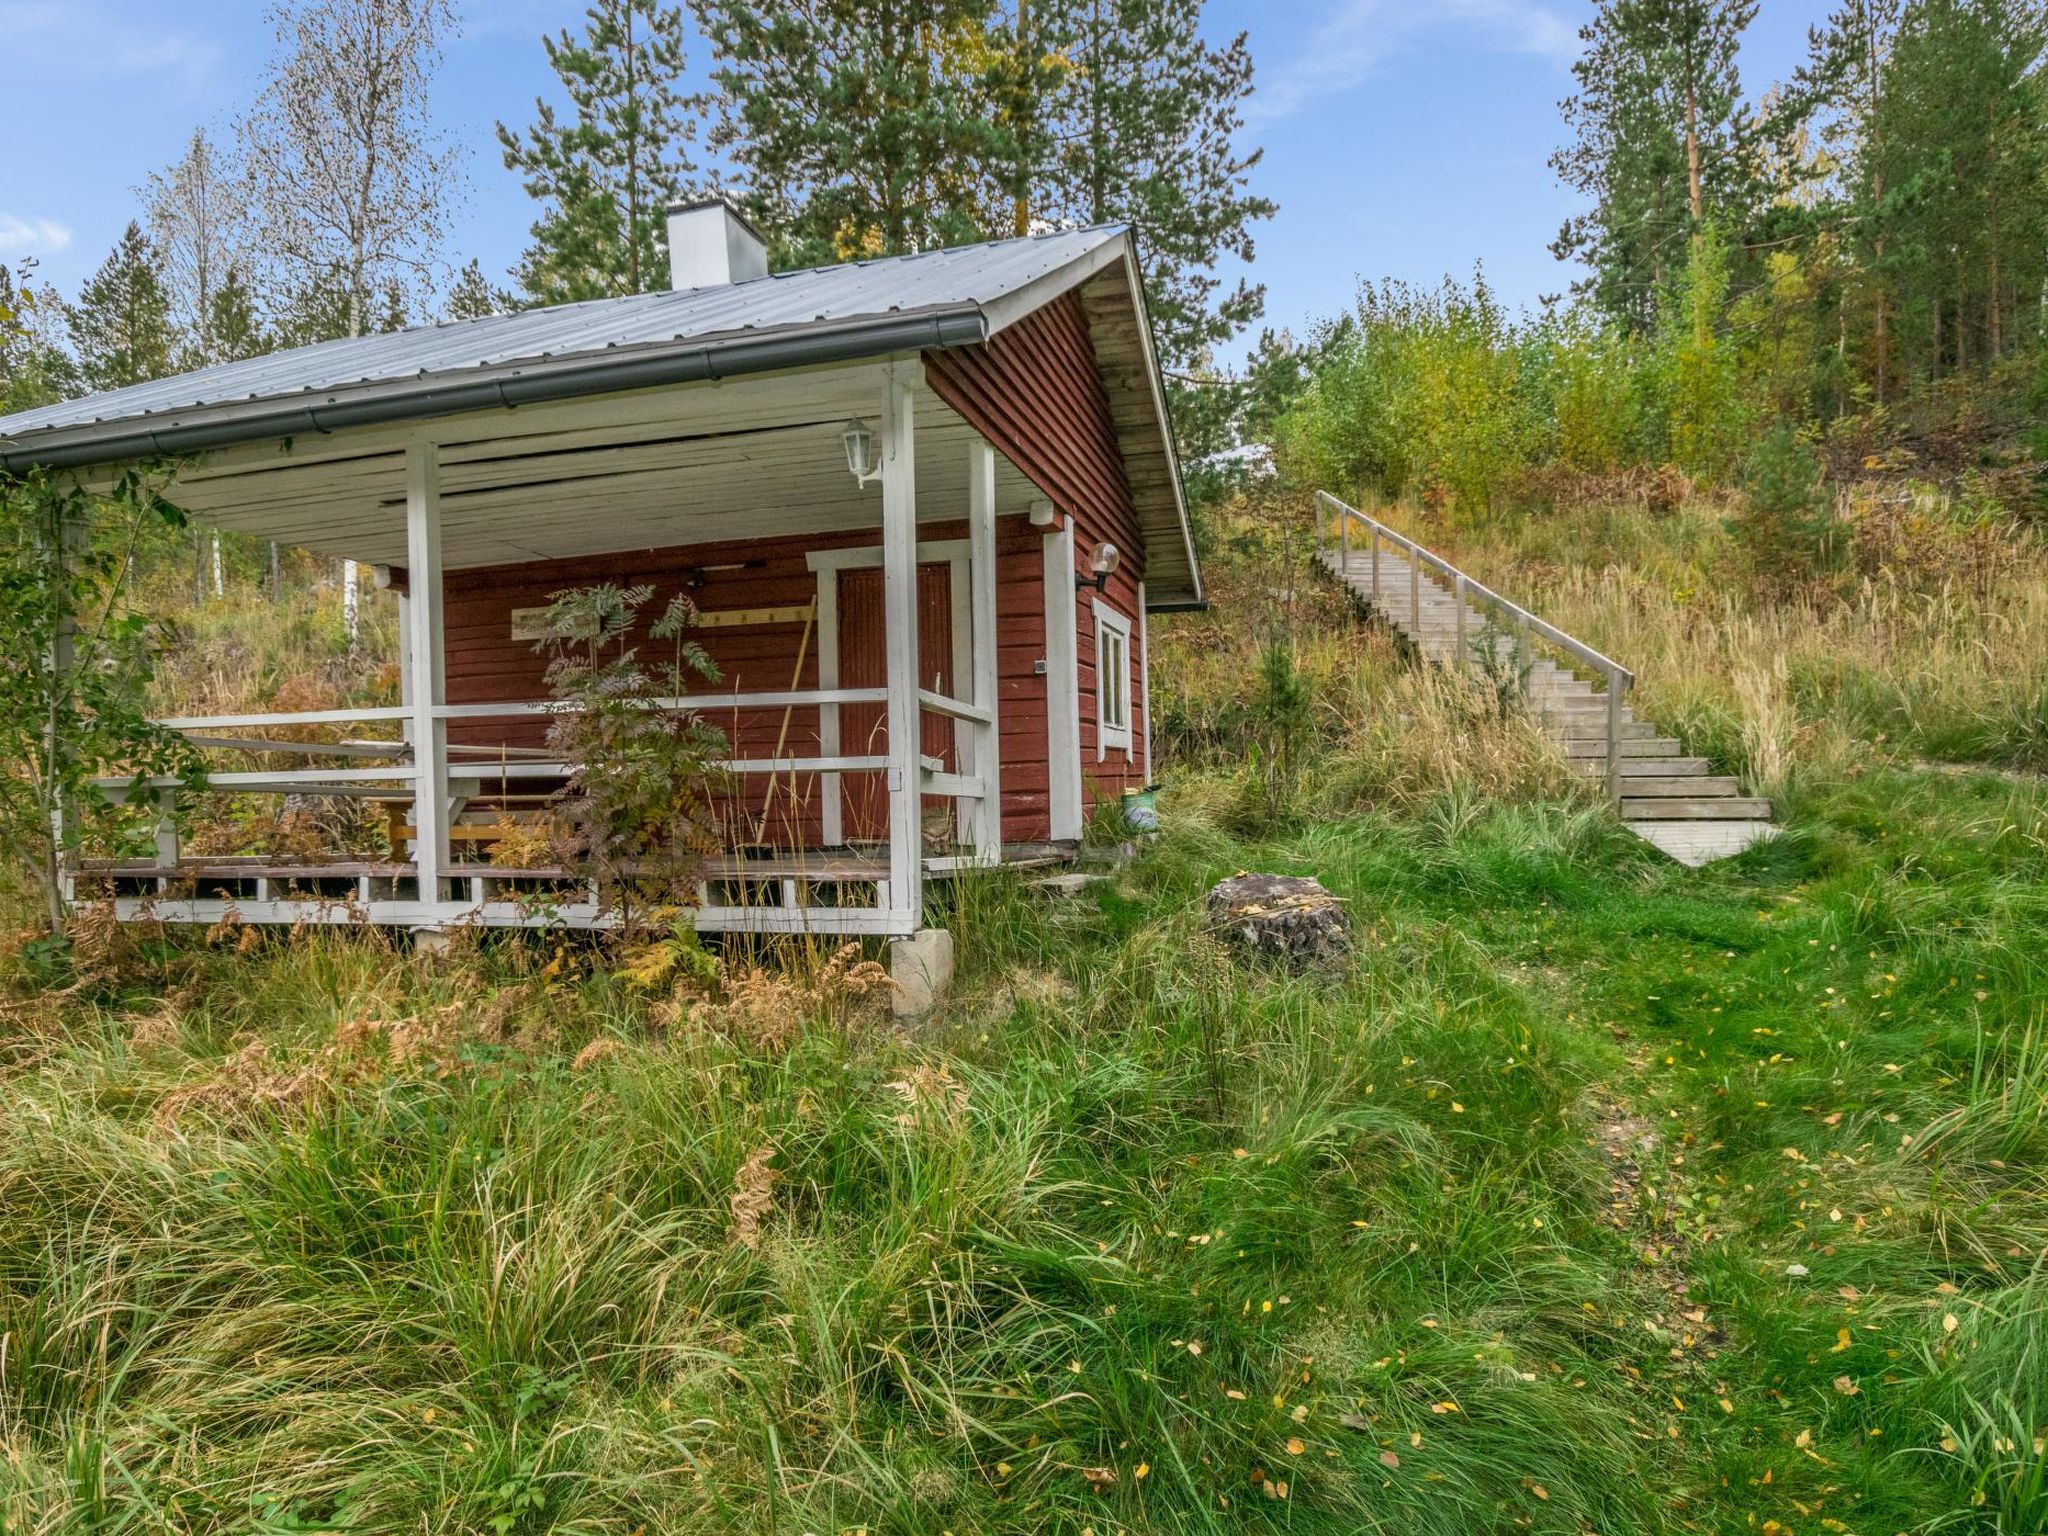 Photo 7 - 2 bedroom House in Mikkeli with sauna